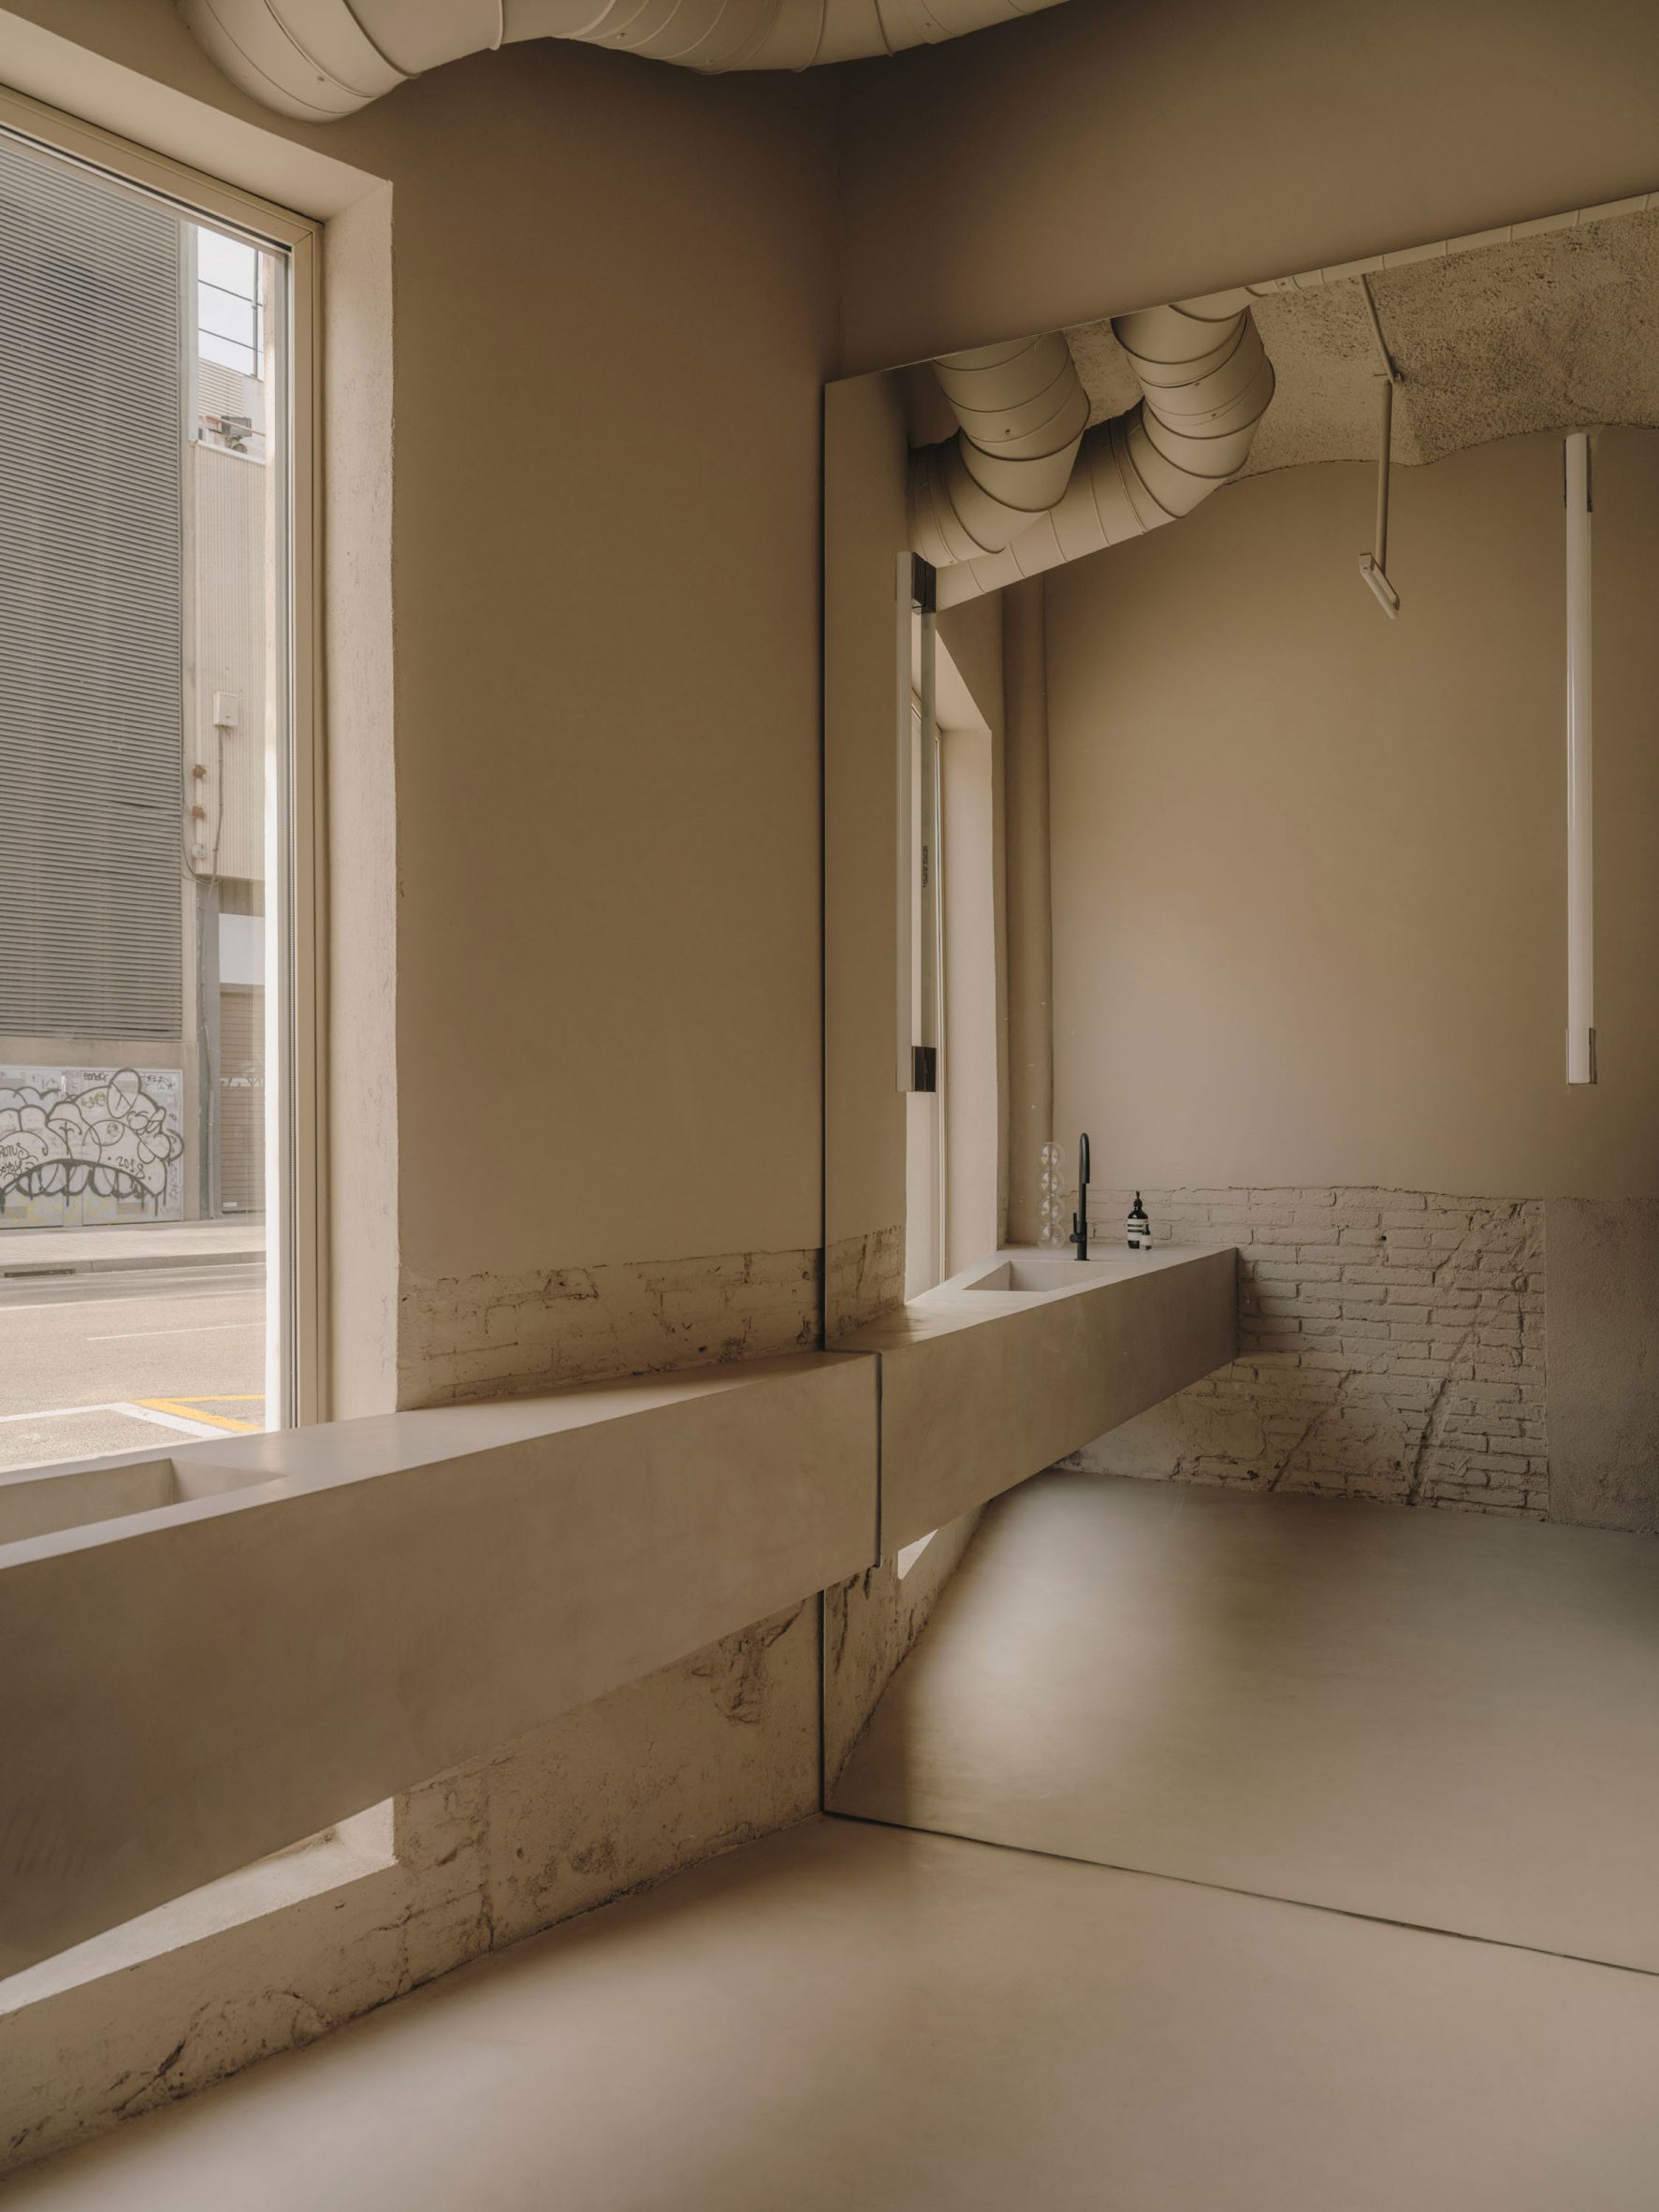 Bathroom interior of Blow Models office in Barcelona, designed by Isern Serra